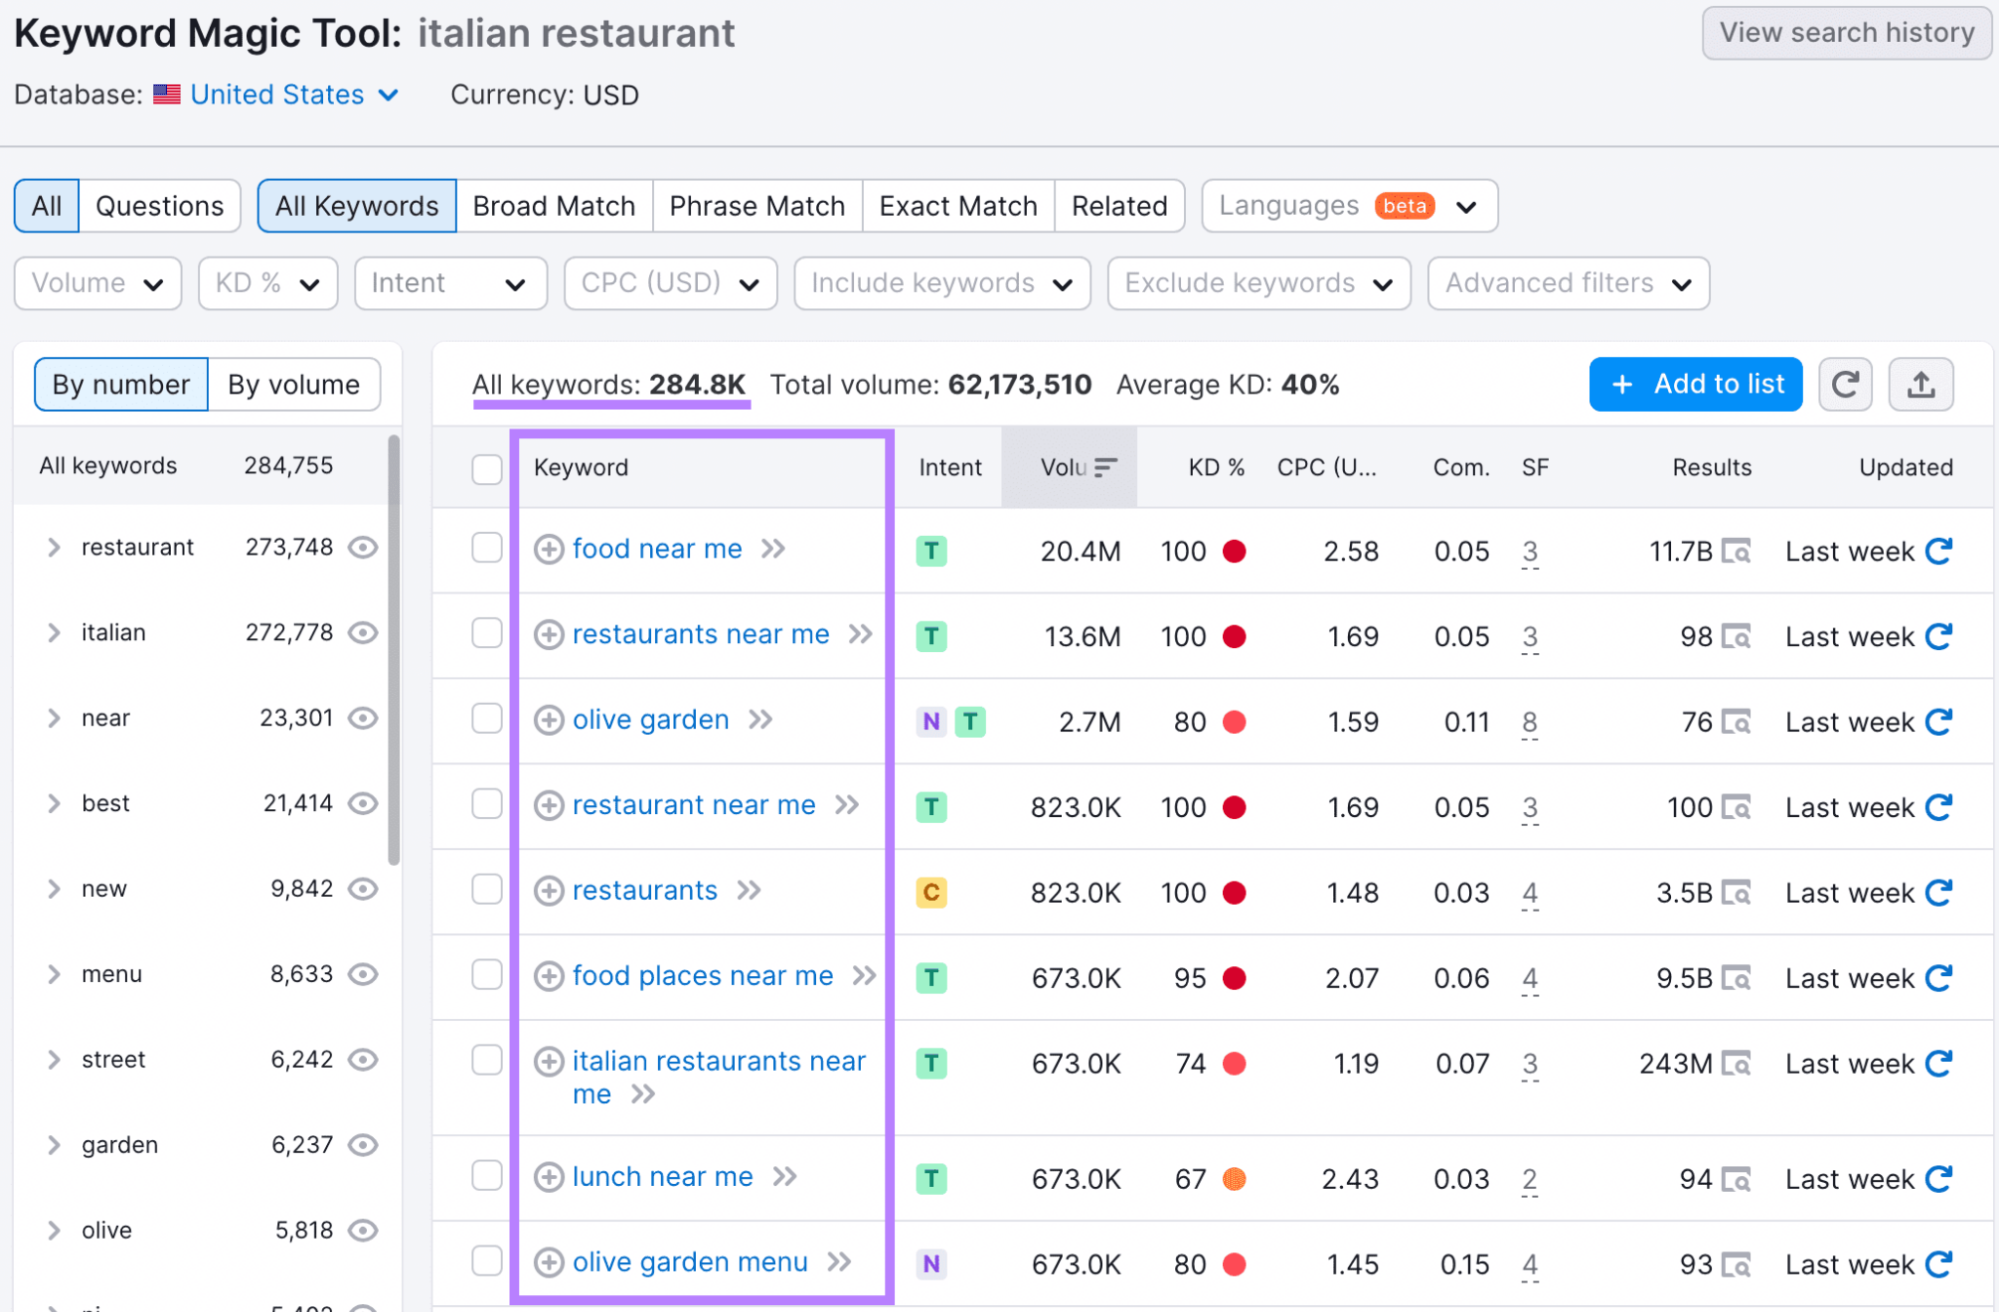 Keyword Magic Tool results for "italian restaurant"